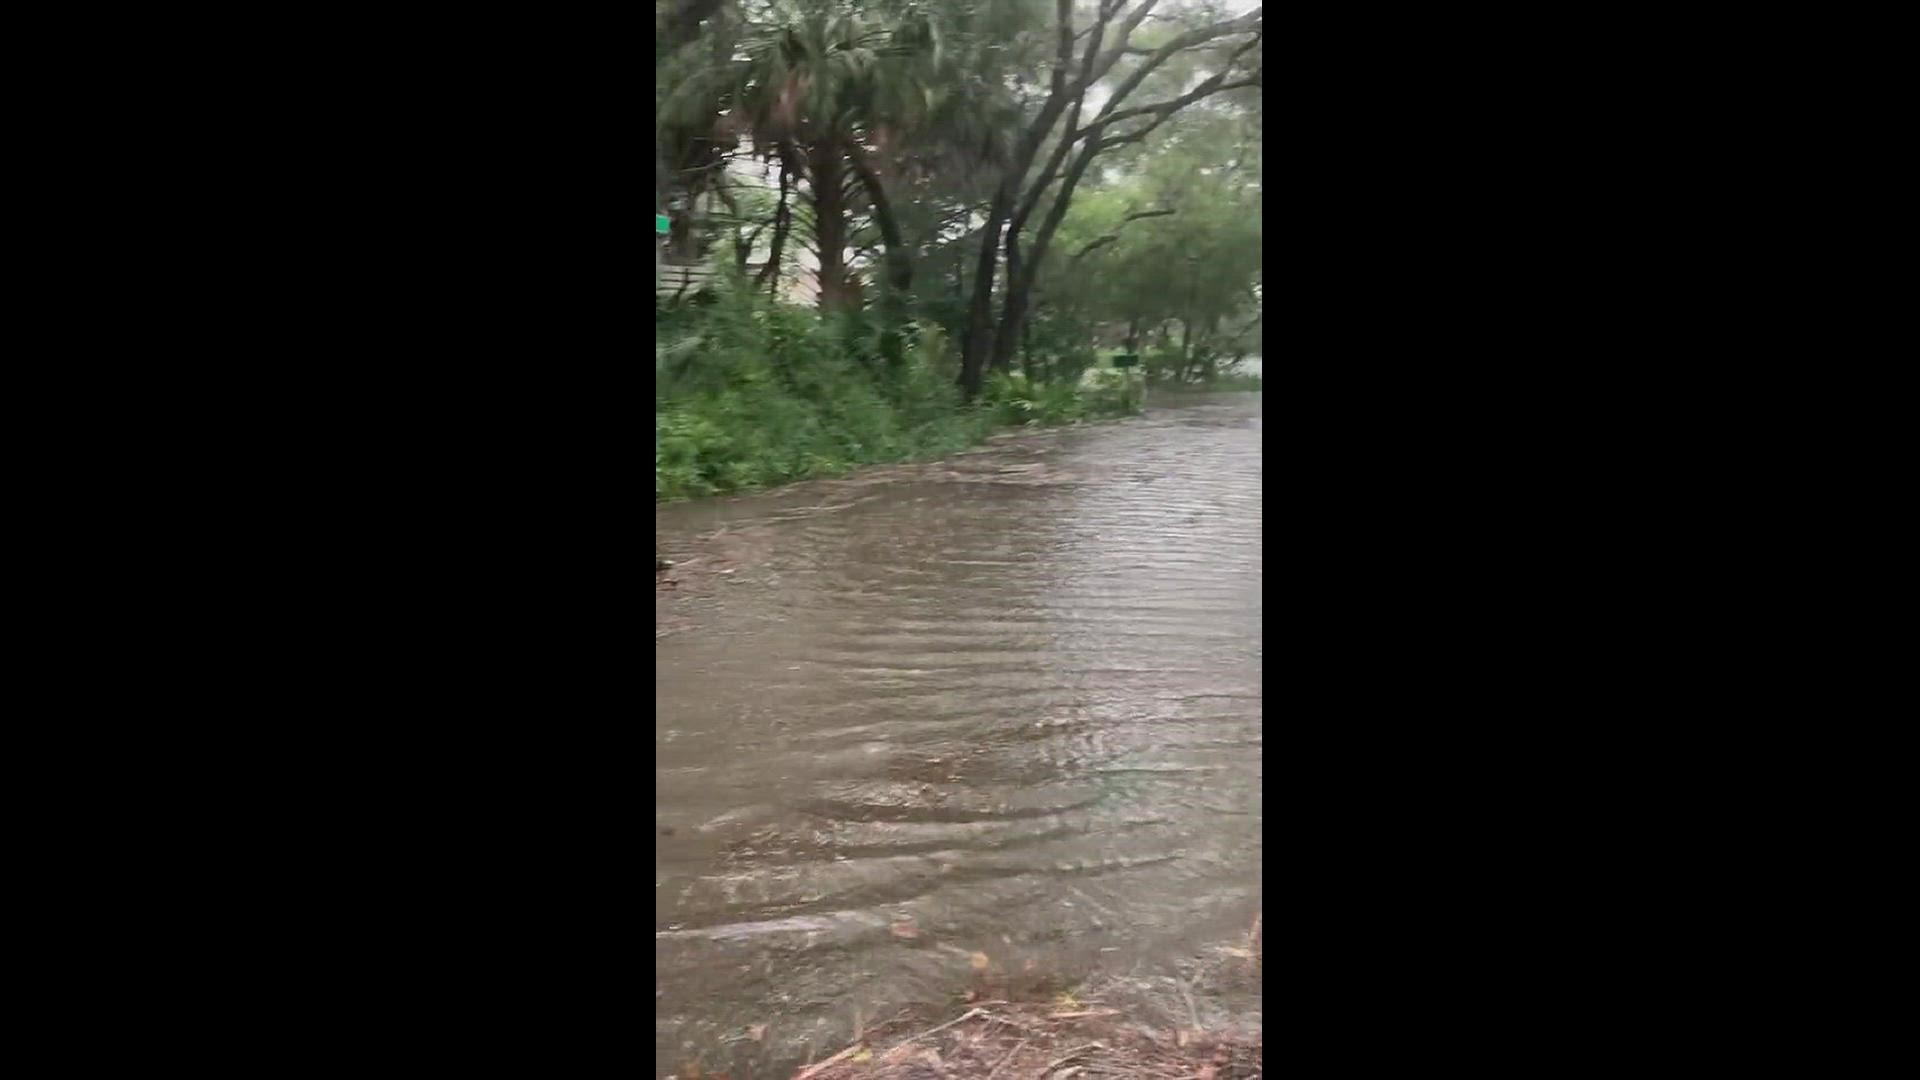 Flooding in the Fullerwood neighborhood in St. Augustine during Hurricane Ian.